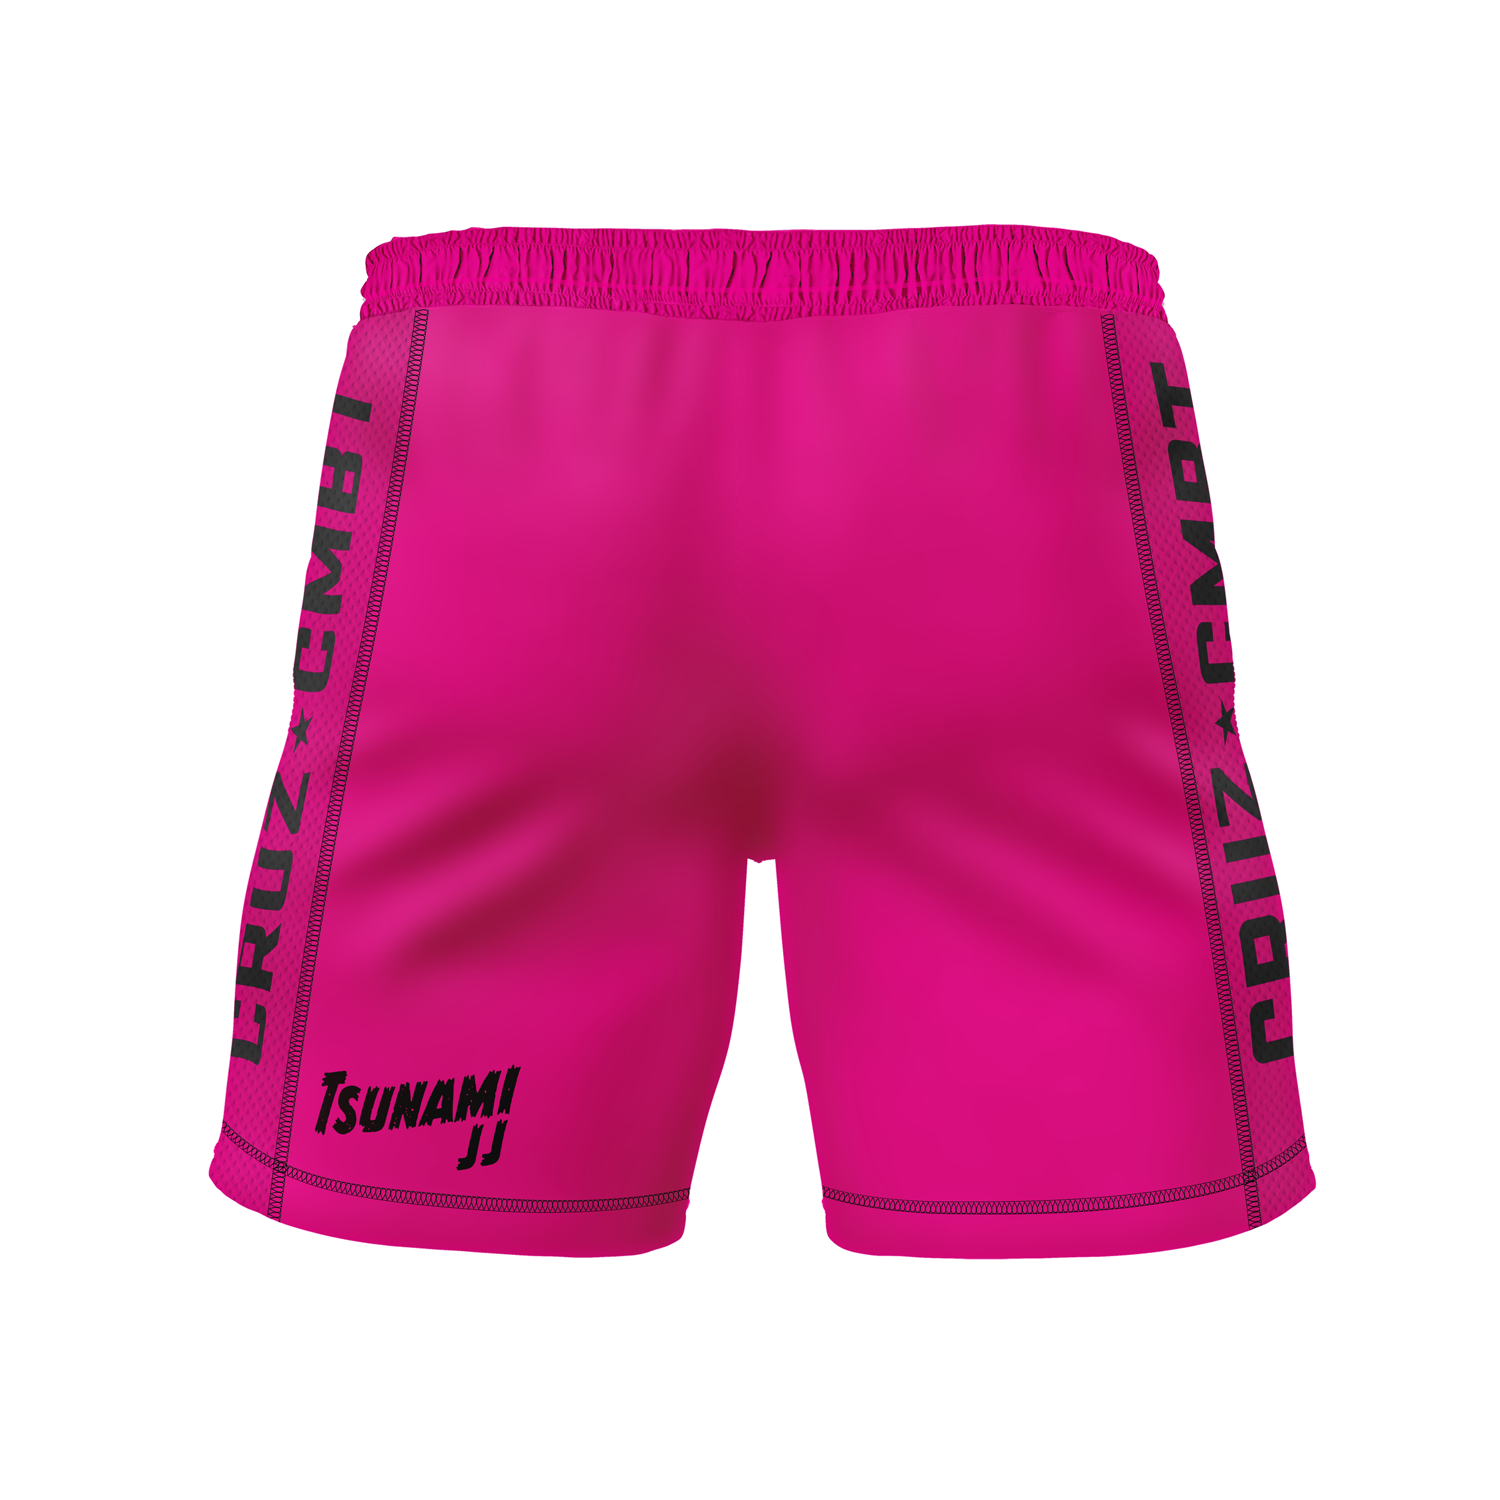 Tsunami JJ men's 7" fight shorts Pink Wave, pink